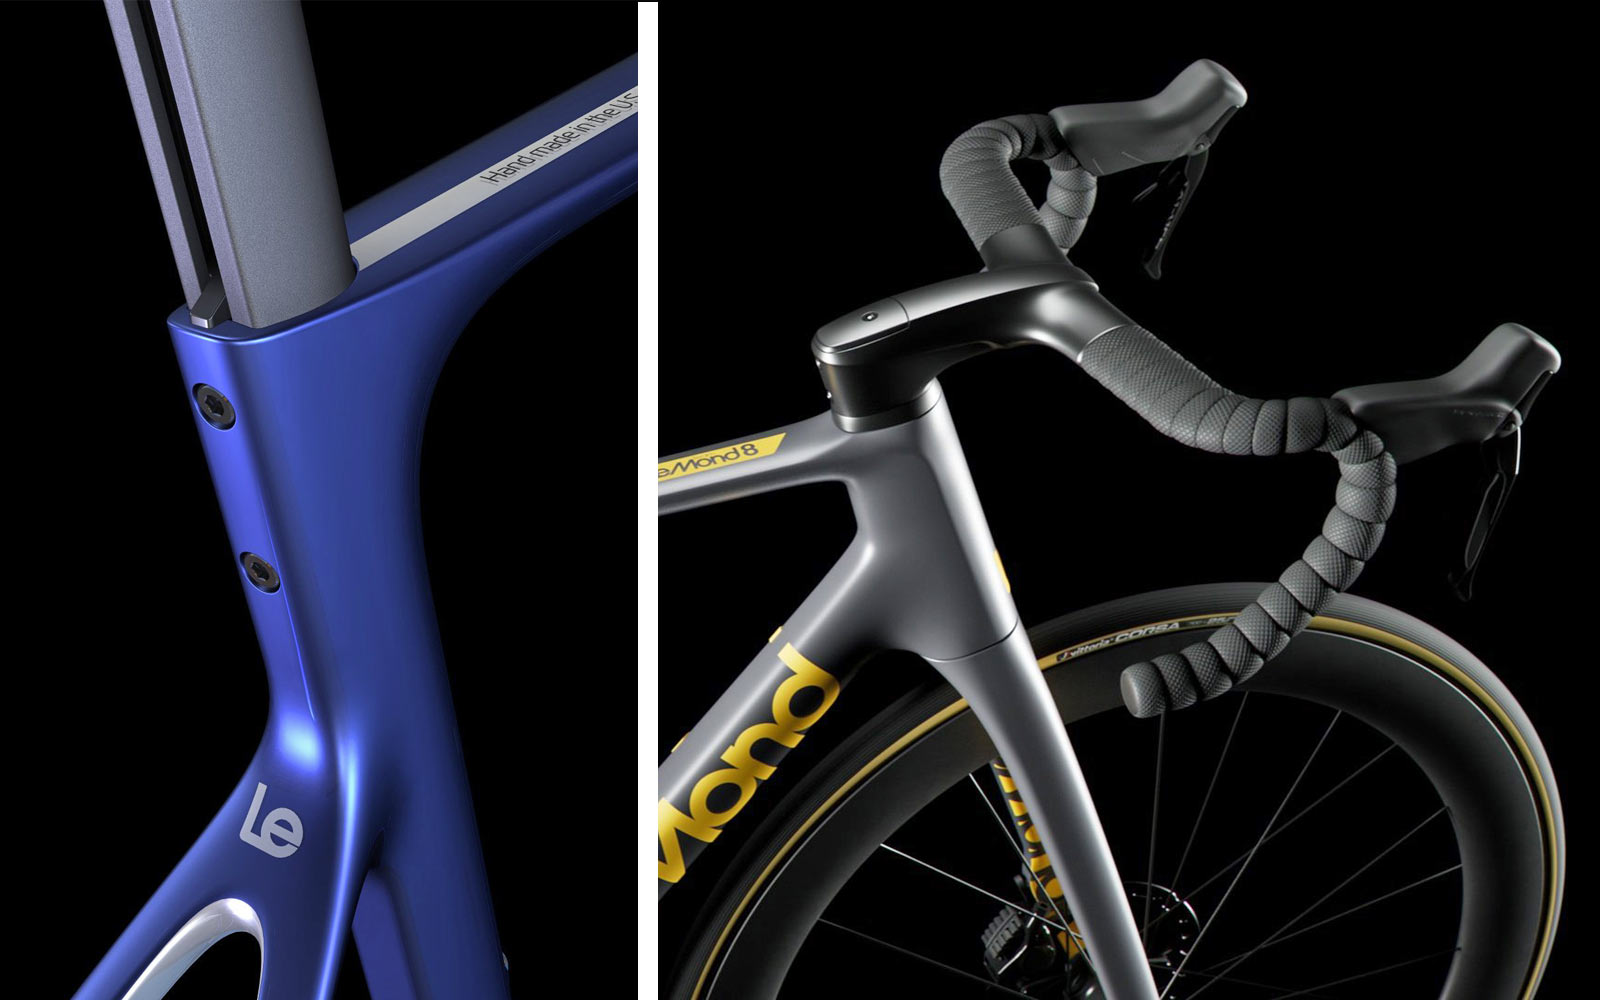 LeMond 8 revolutionary carbon aero road bike, details